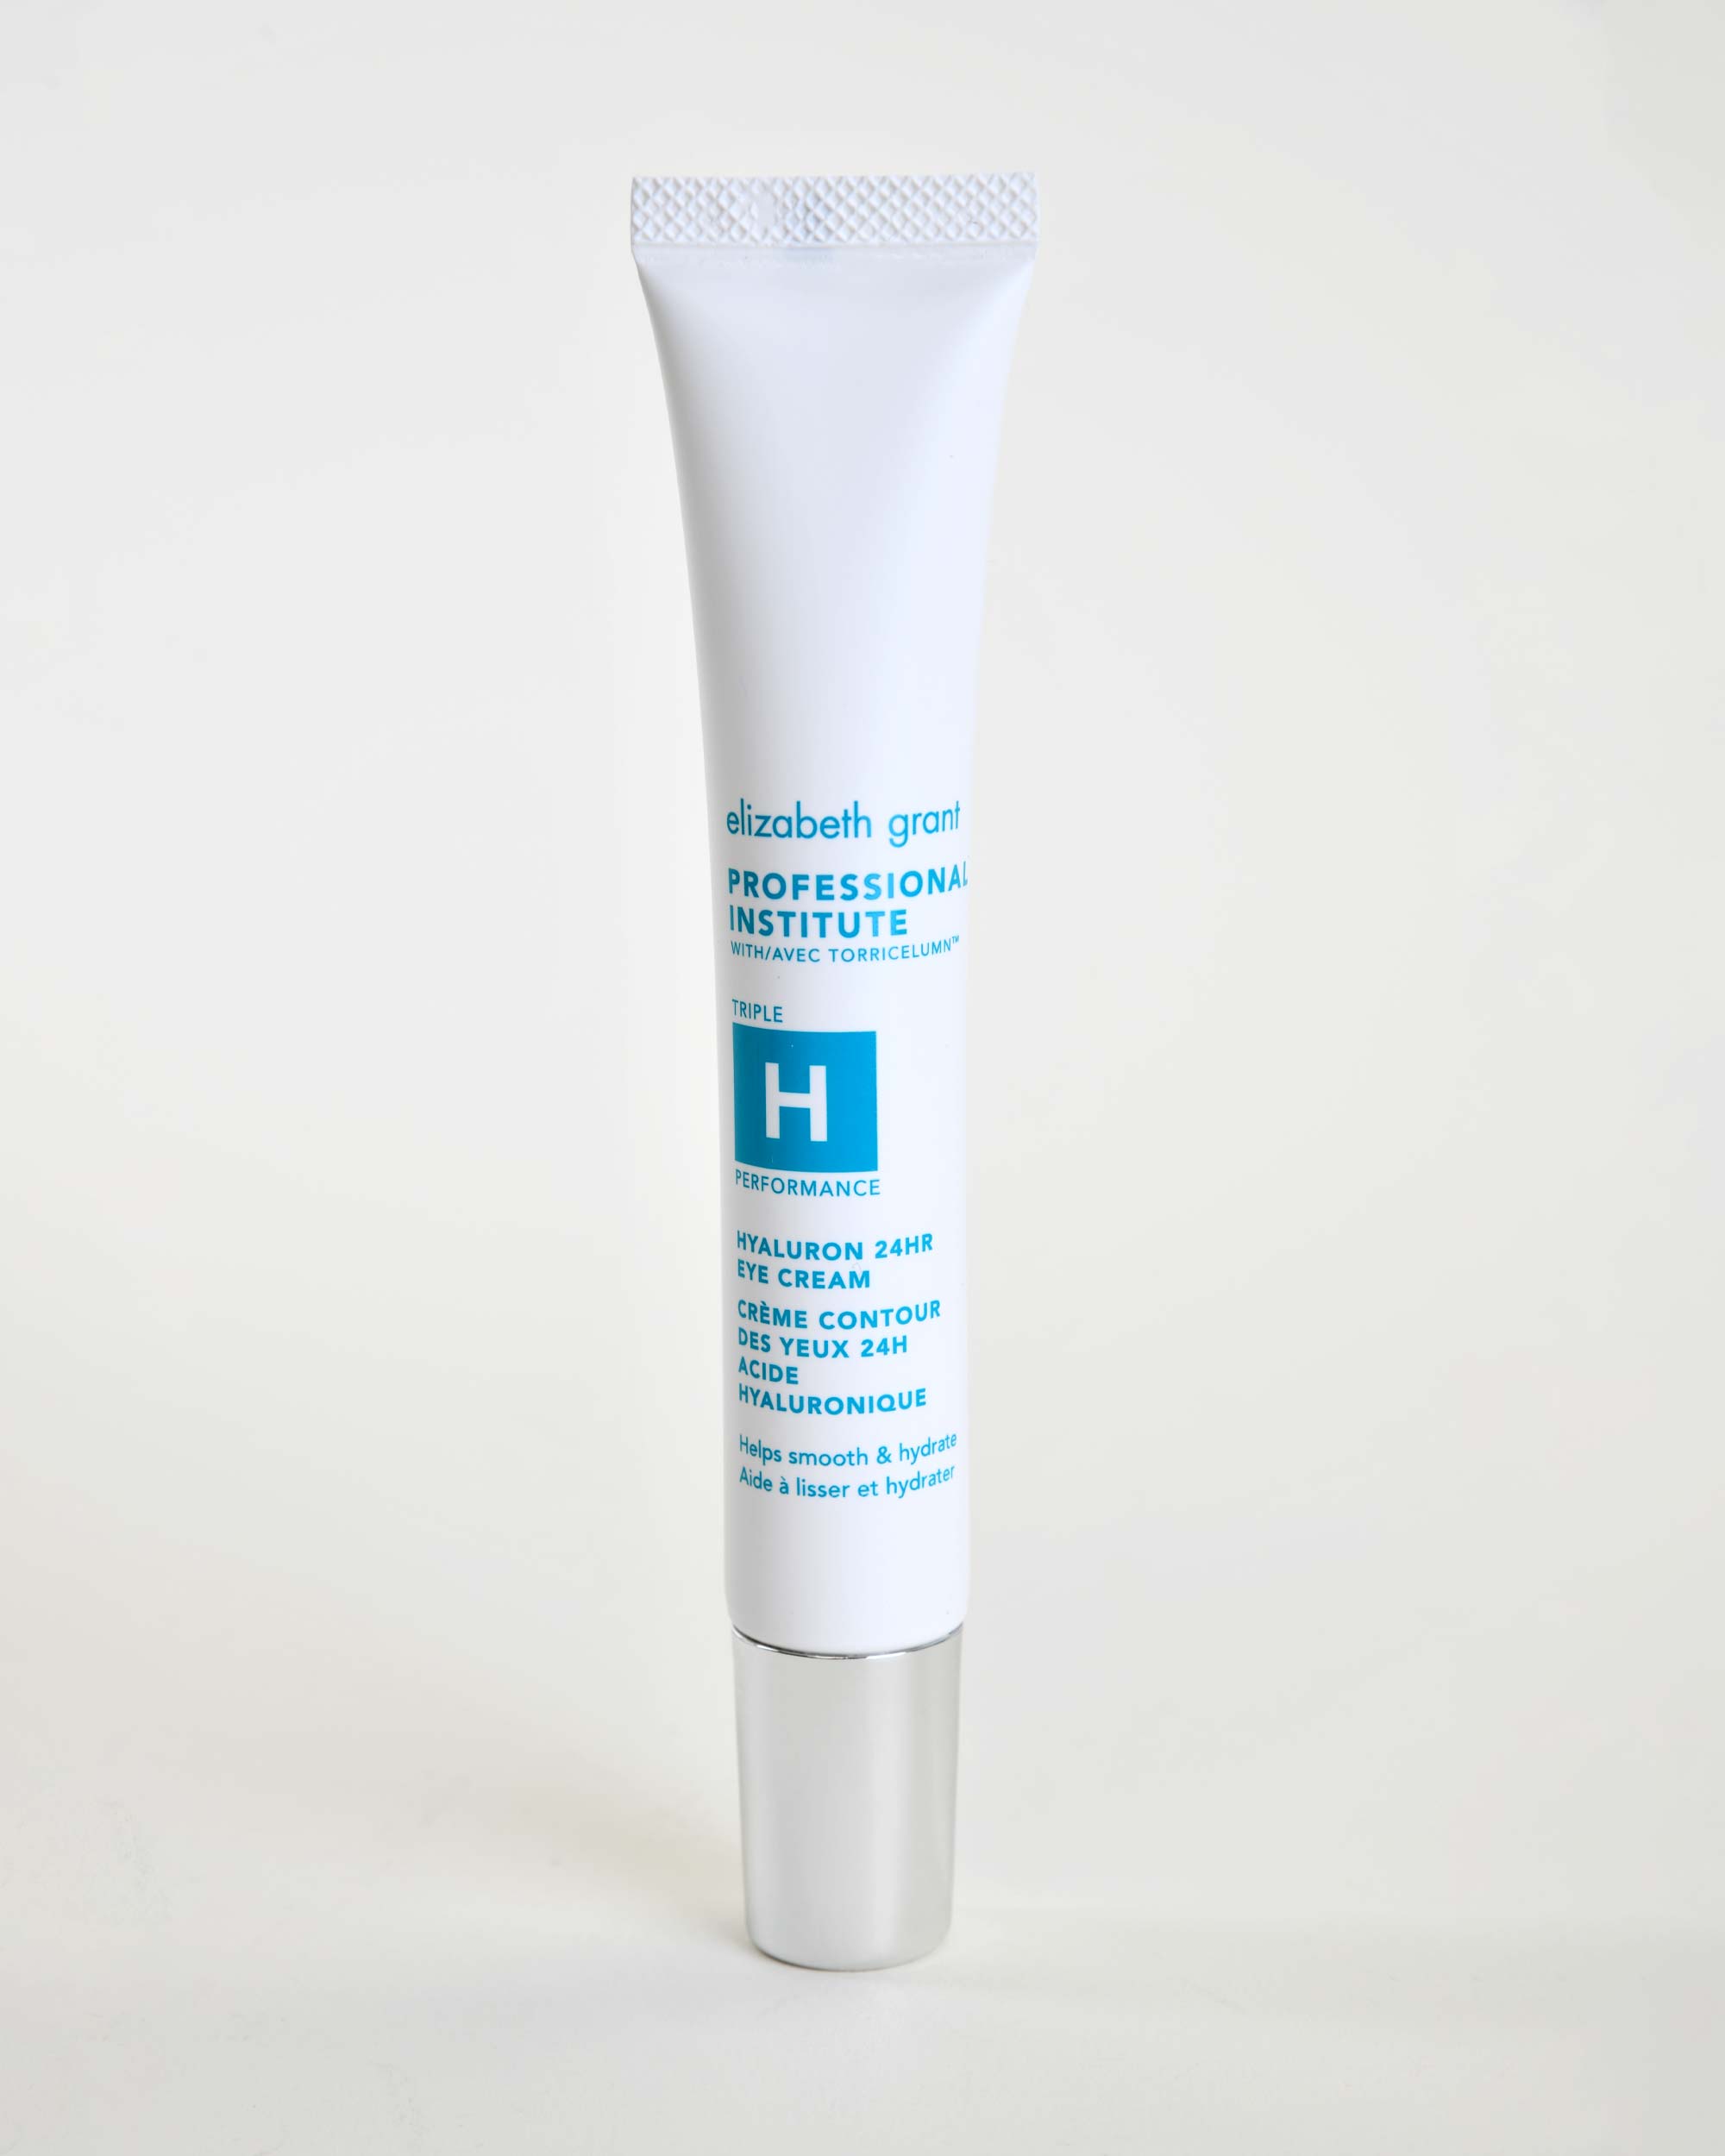 Professional Institute Triple Performance Hyaluron 24 Hour Eye Cream